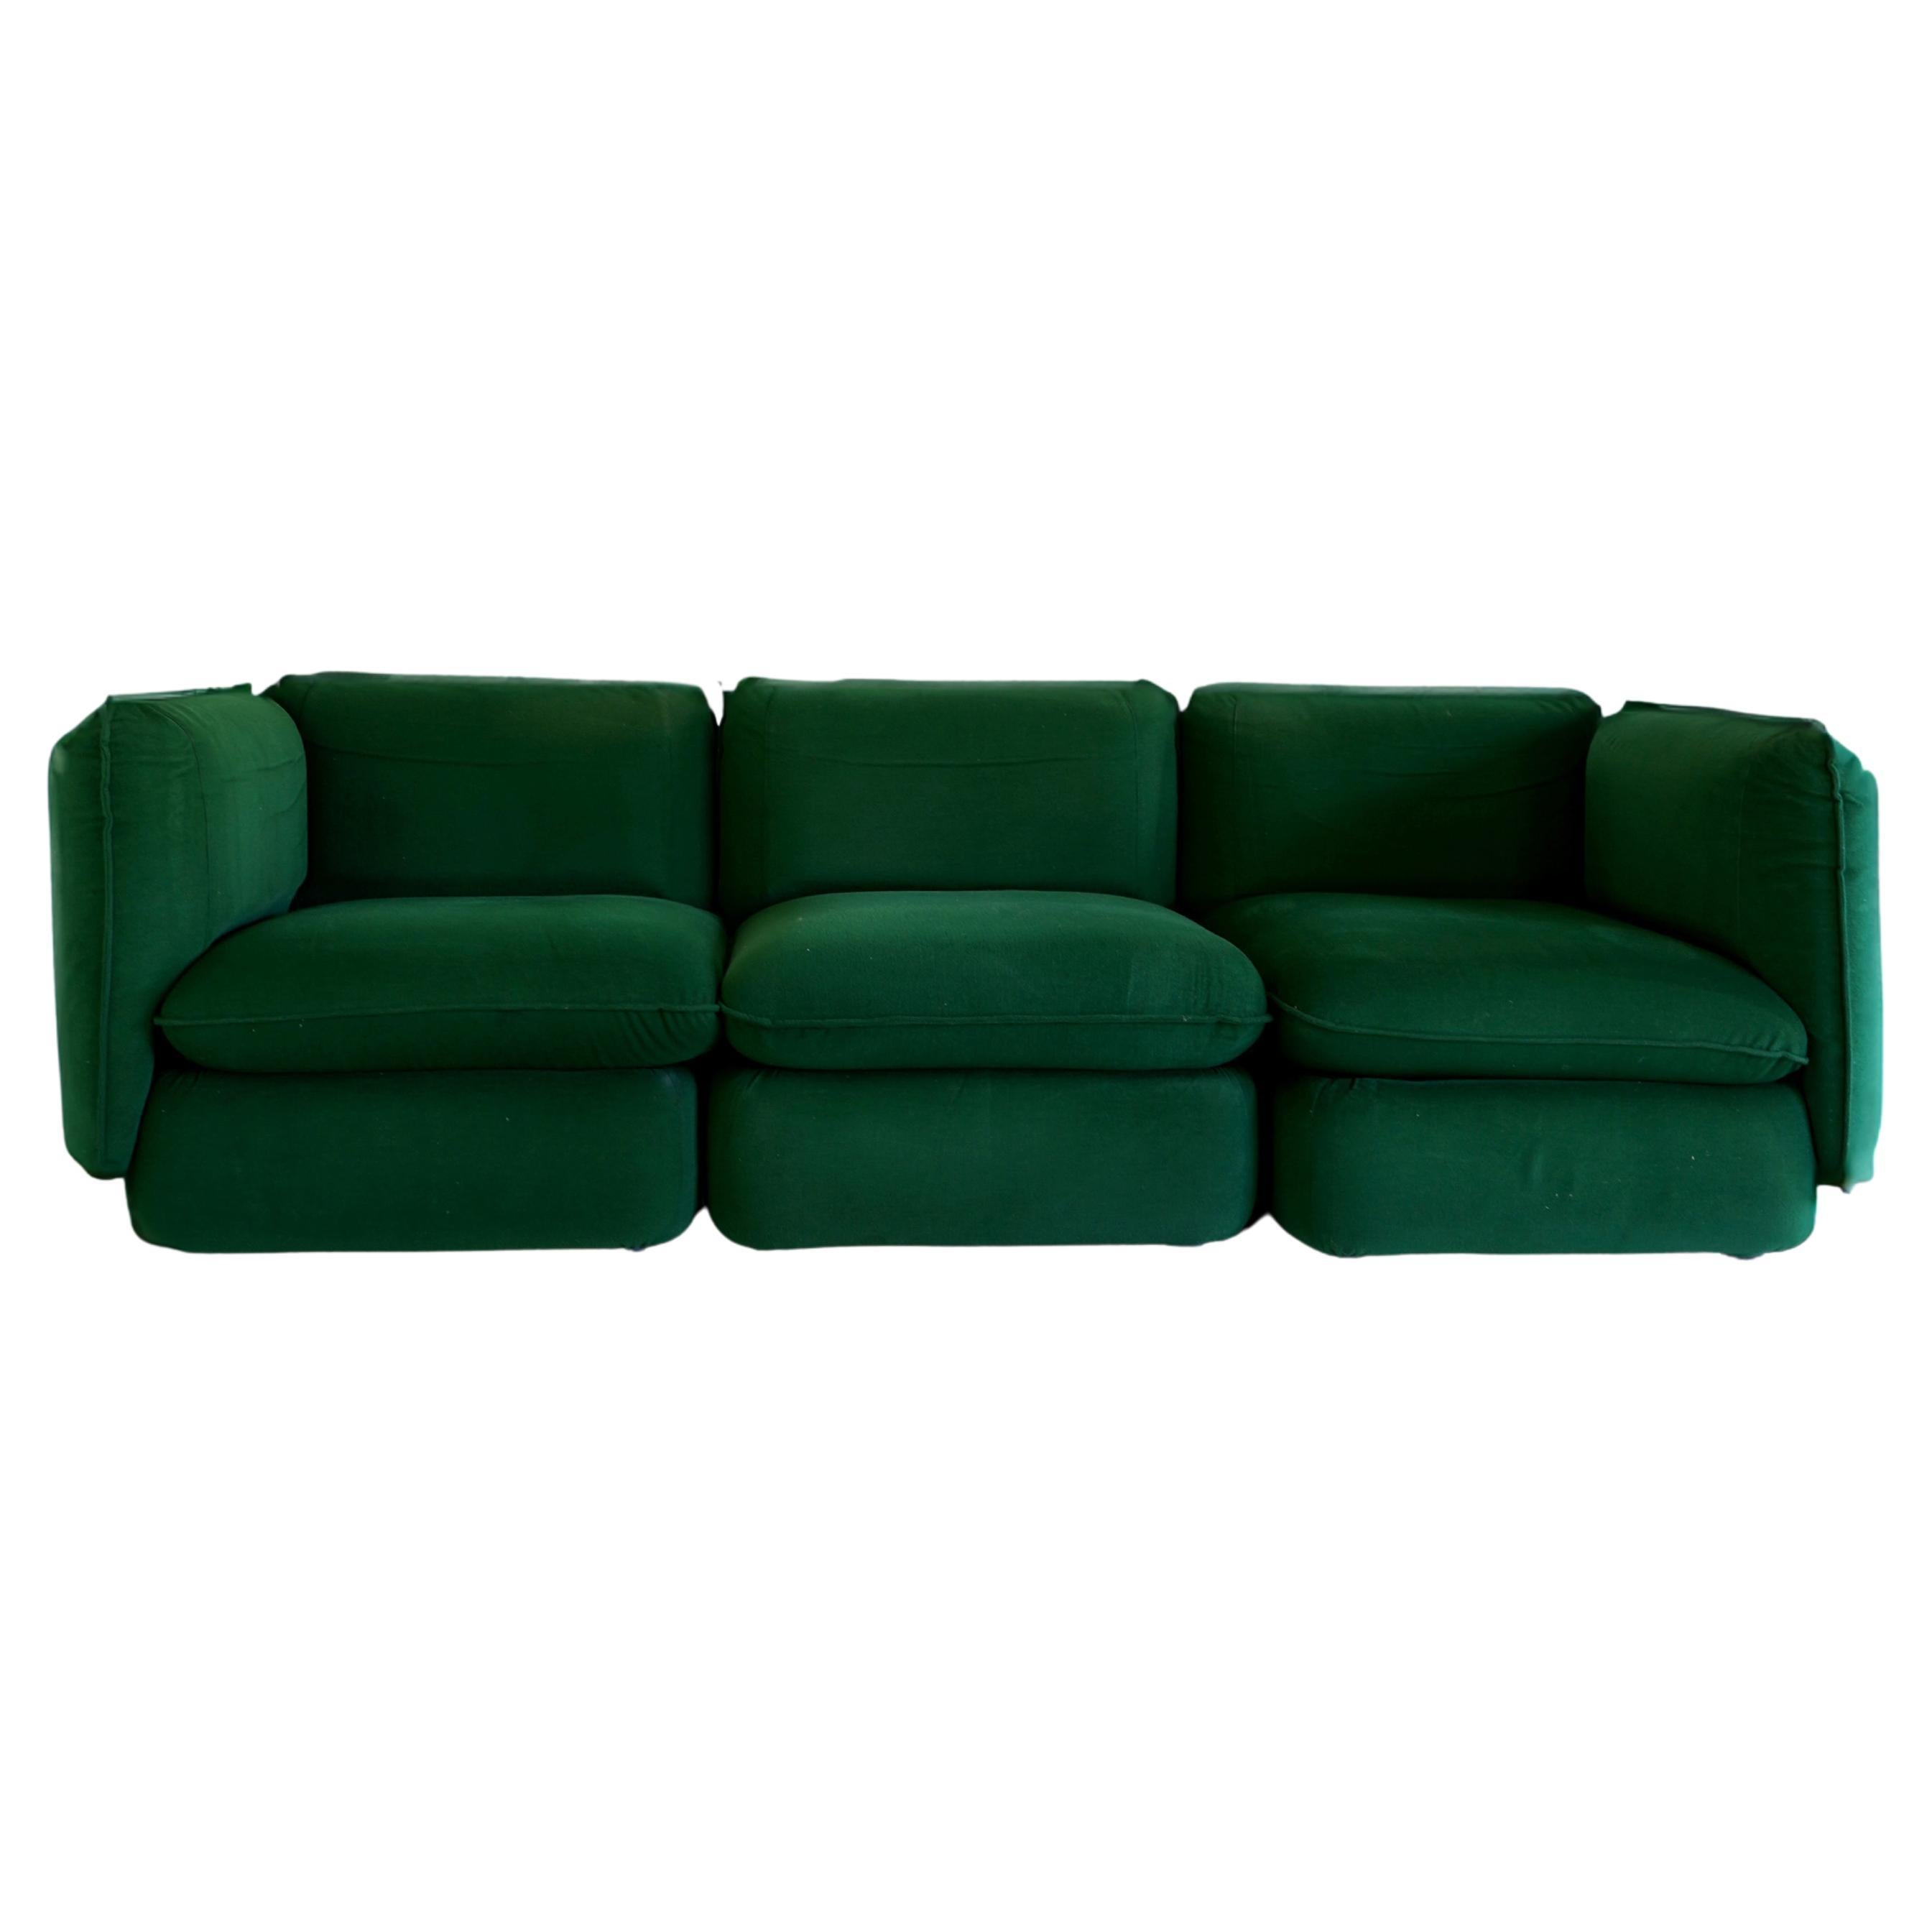 Modulares 3-Sitz-Sofa aus grüner Chenille, IPE Cavalli, Italien im Angebot